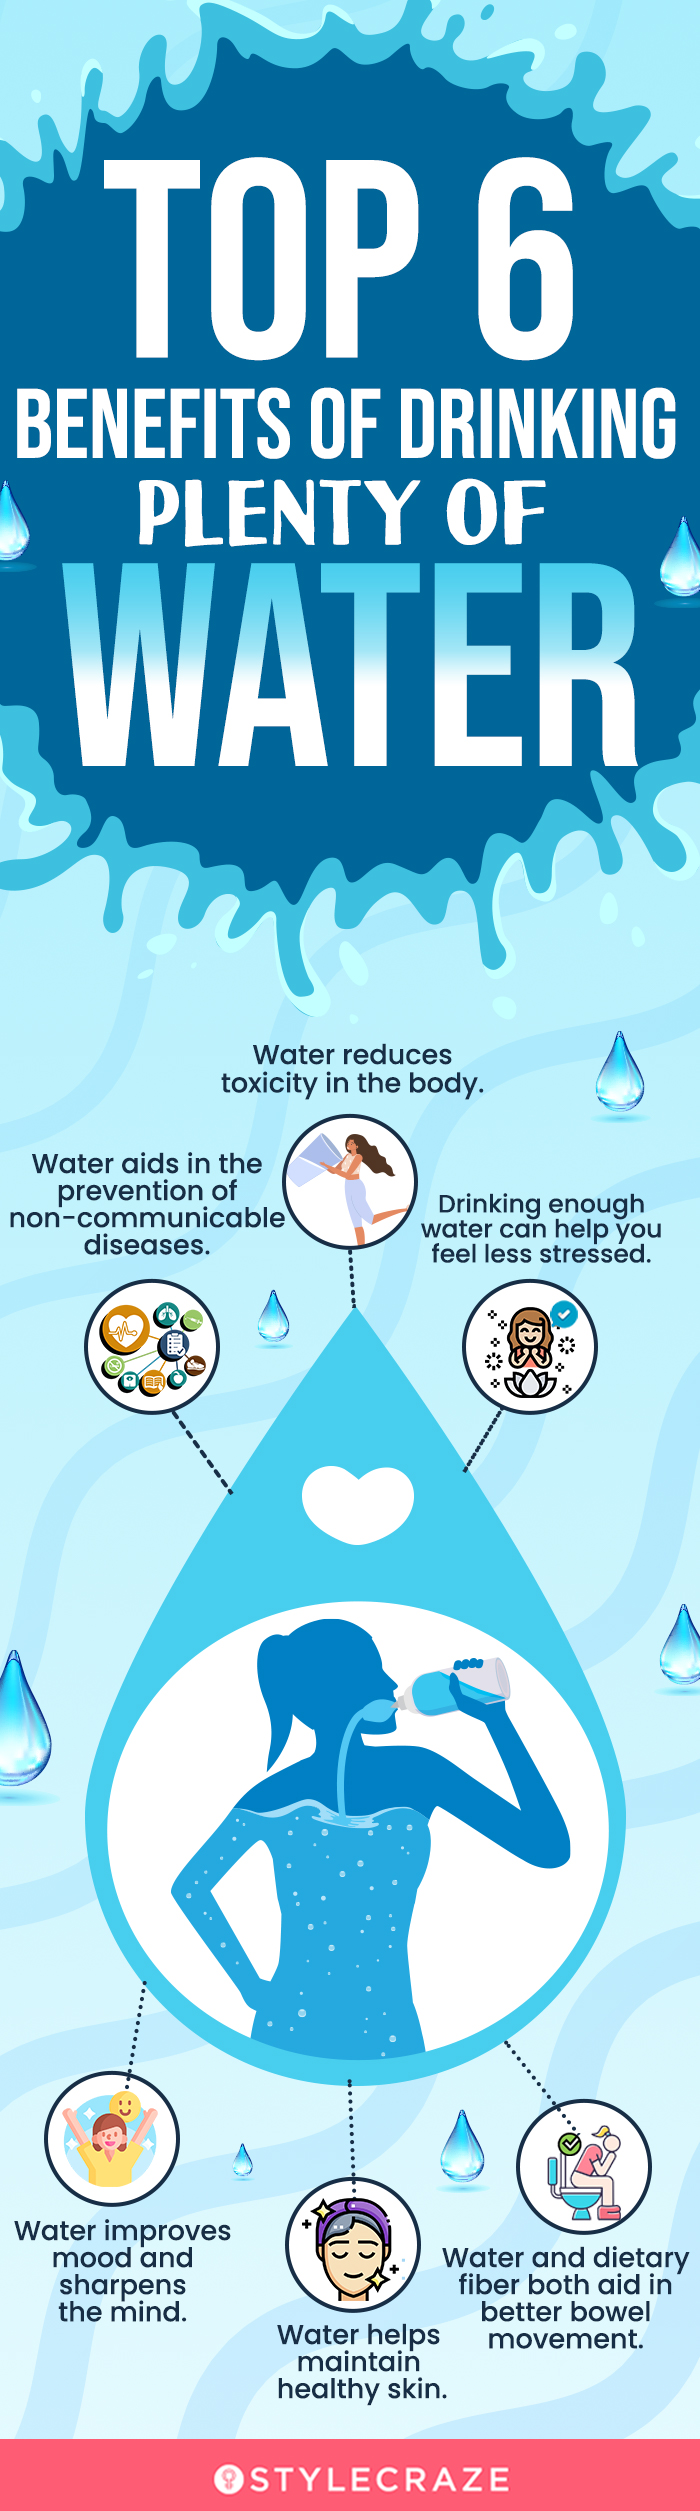 top 6 benefits of drinking plenty of water [infographic]